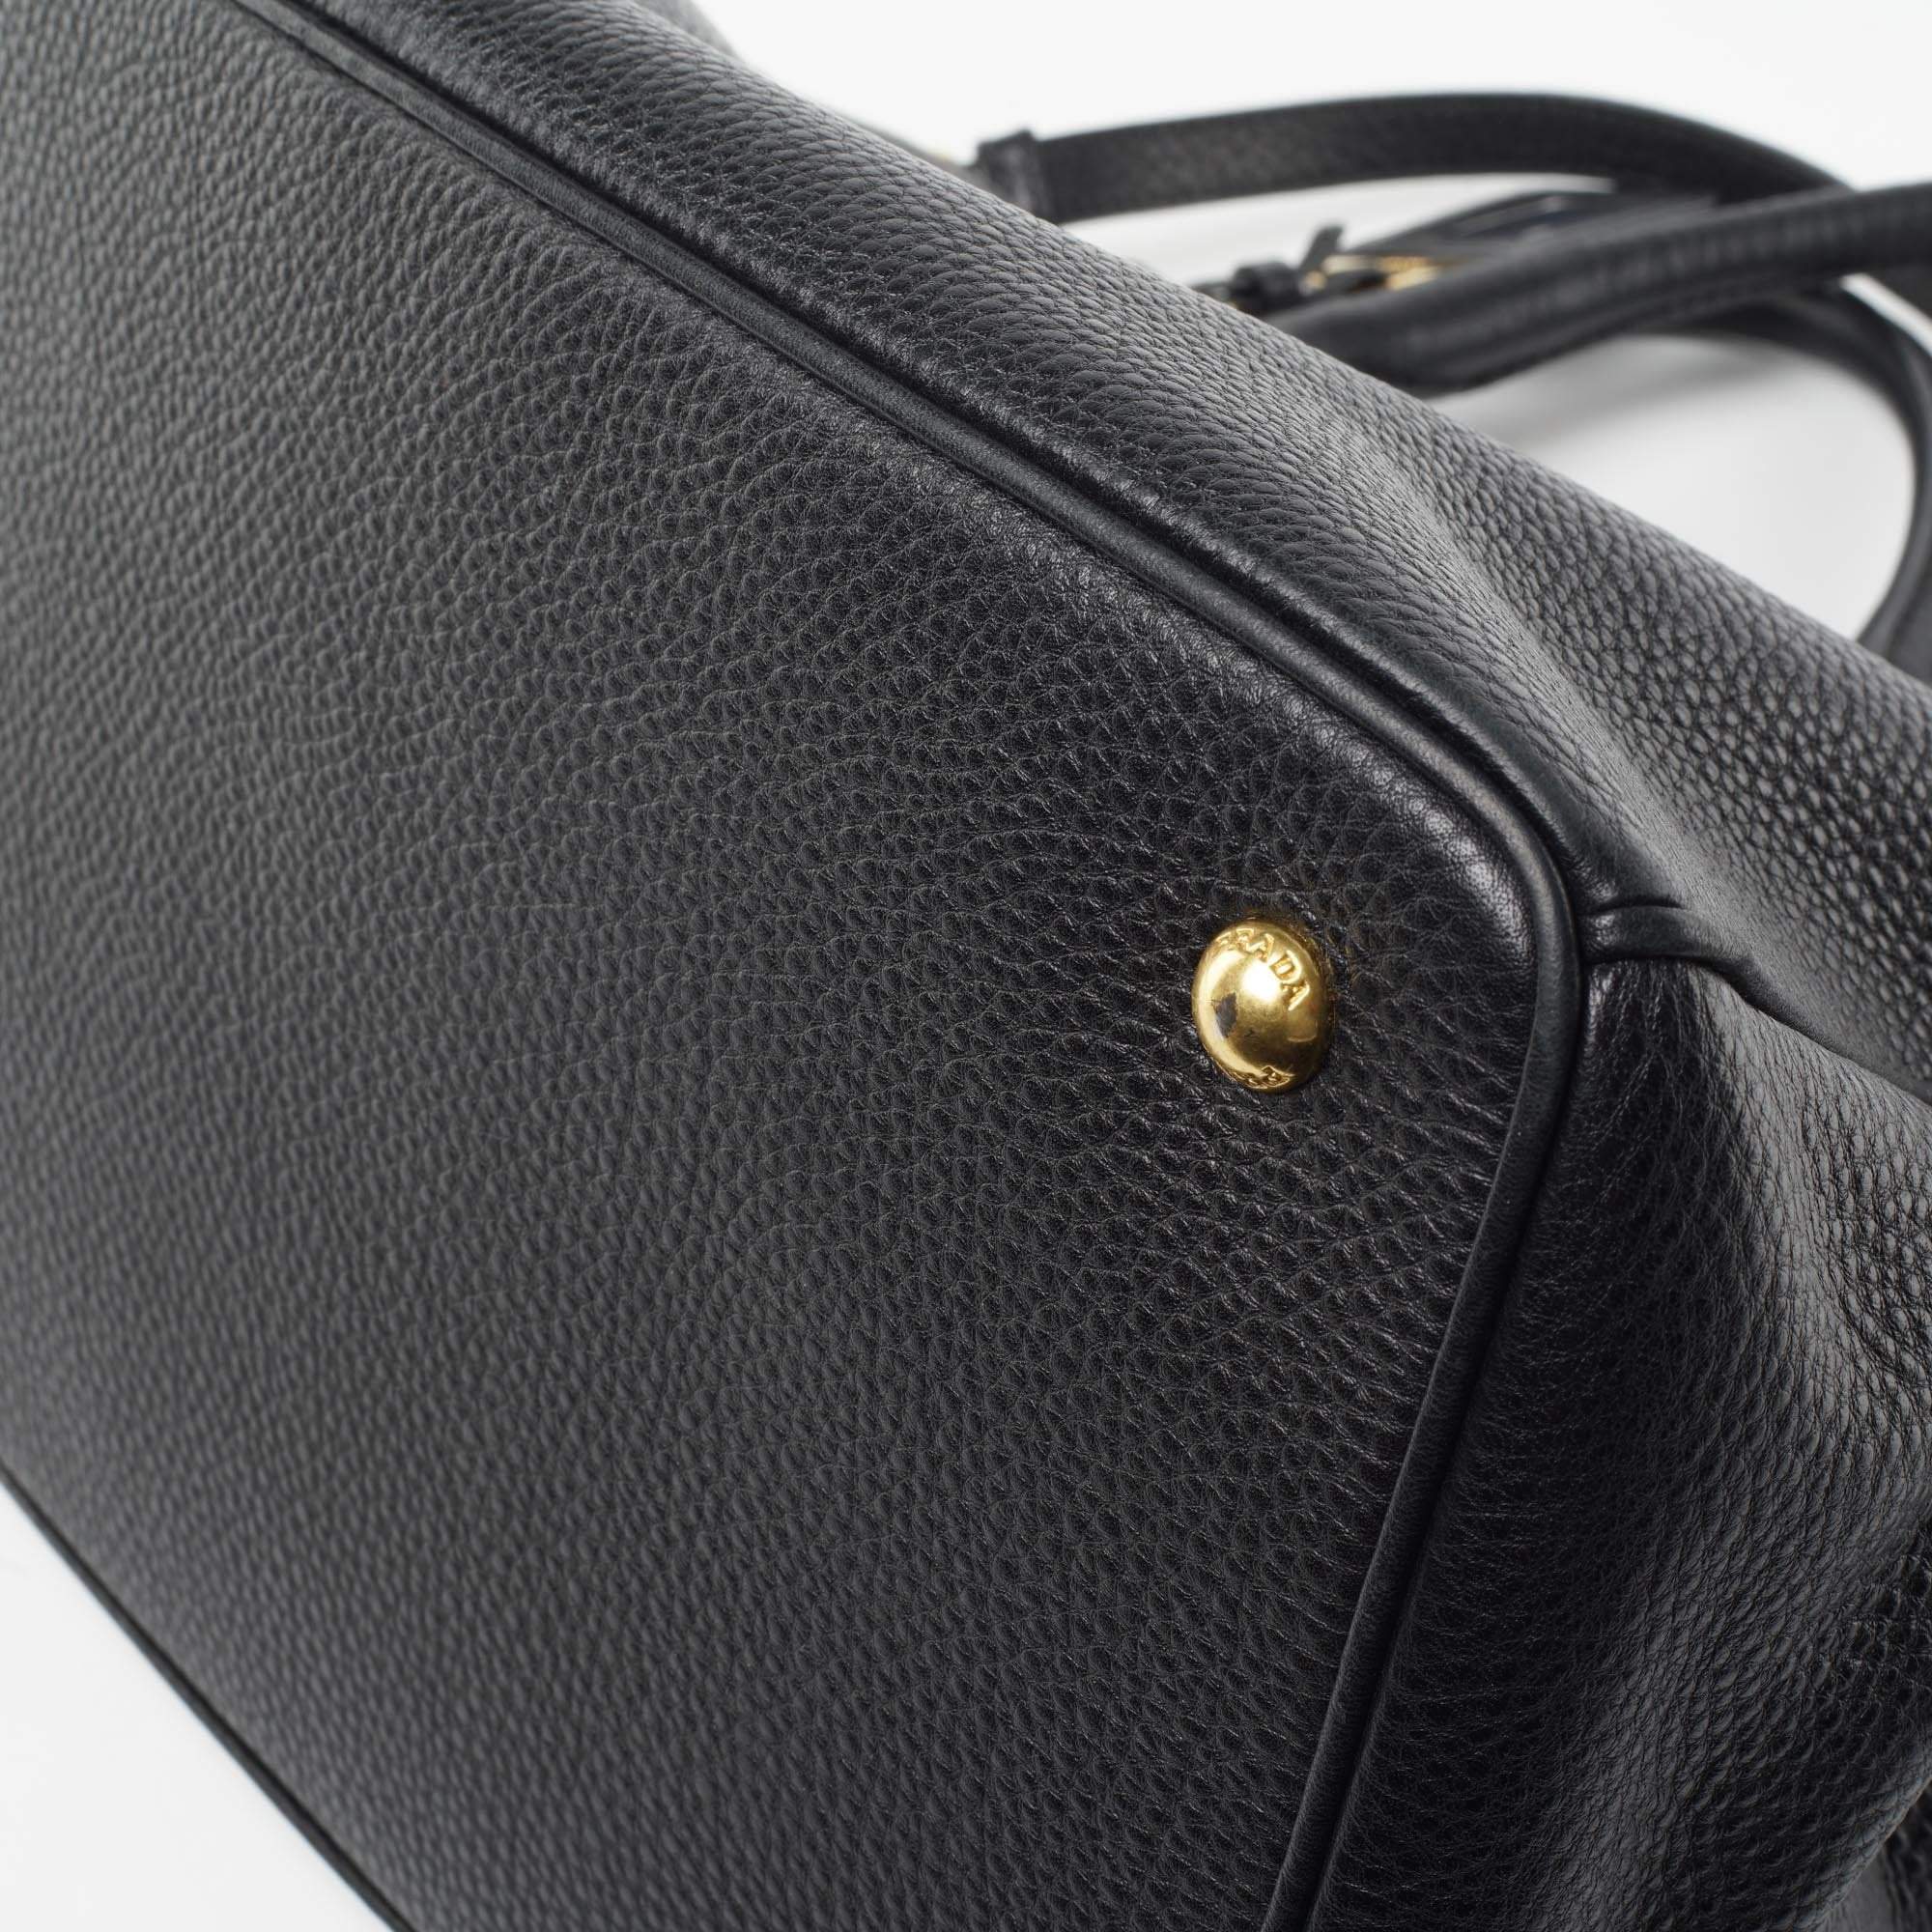 Prada Black Pebbled Leather Vitello Daino Tote Bag – Garderobe